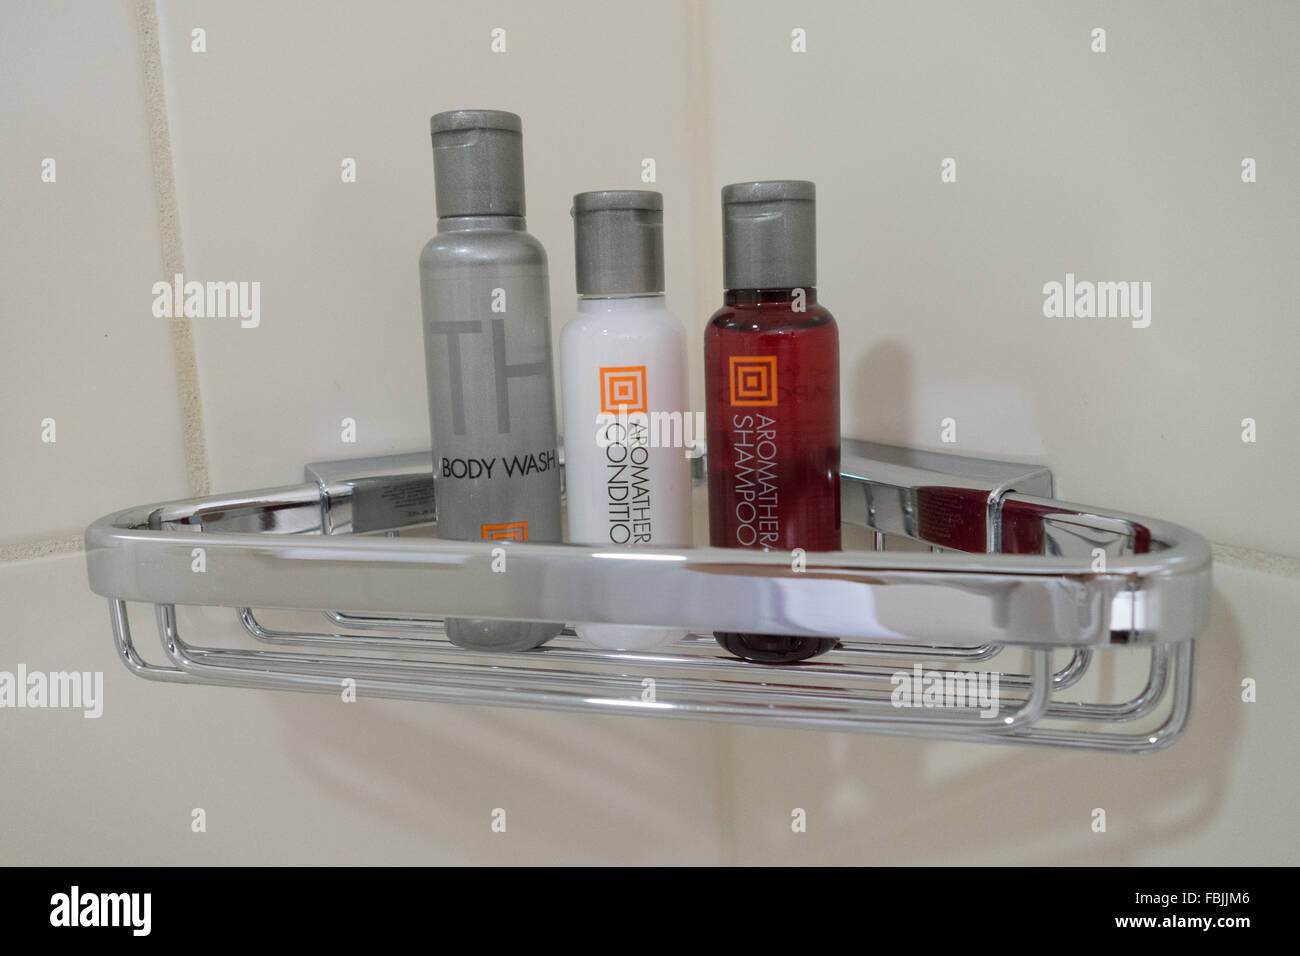 chrome bathroom soap holder Stock Photo